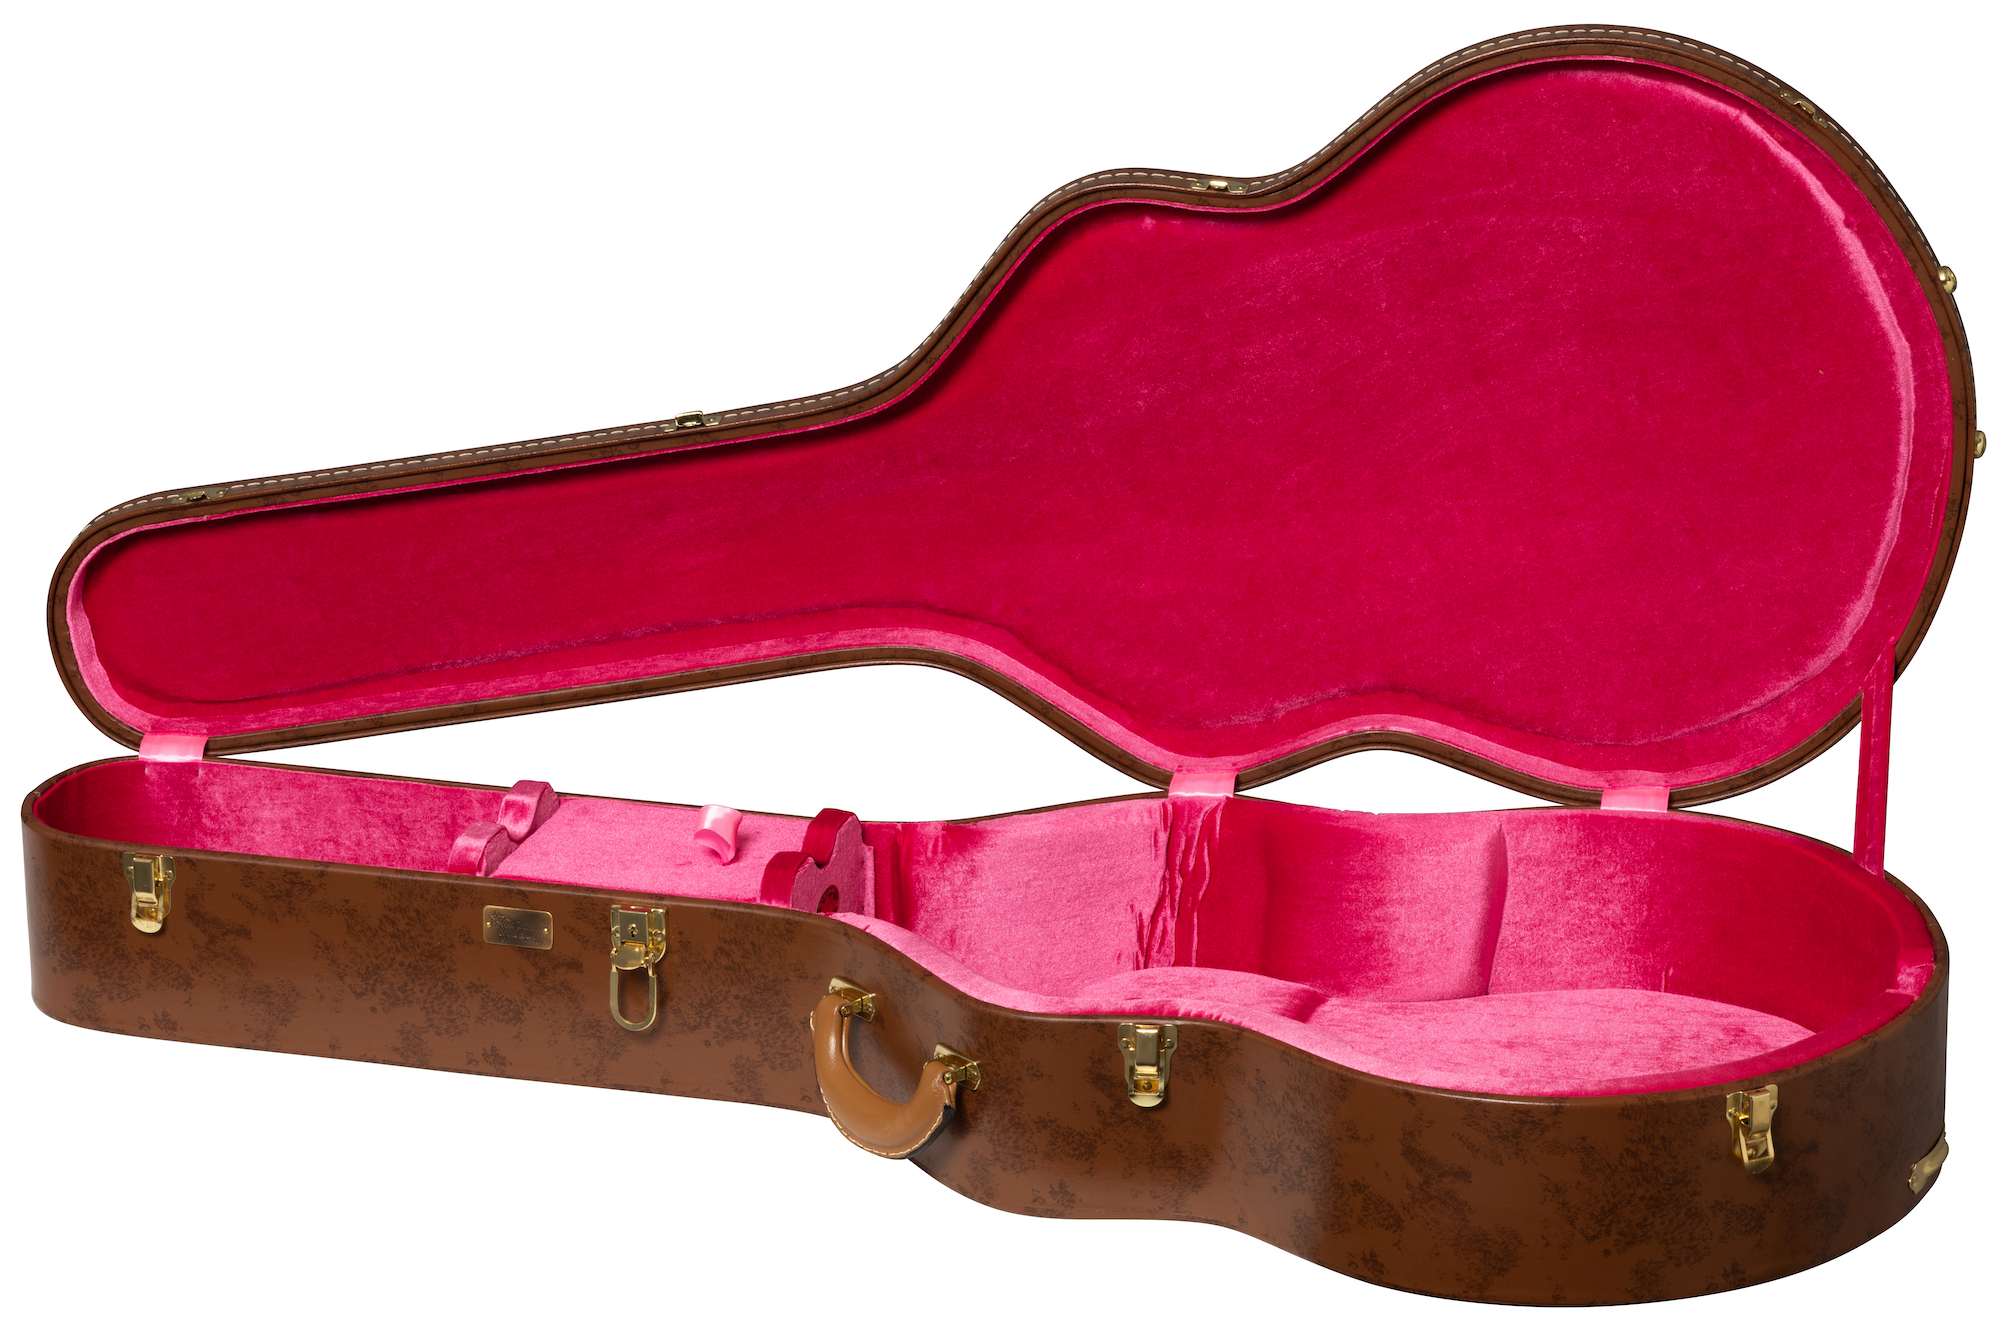 Lifton Historic Brown/Pink Hardshell Case, J-185